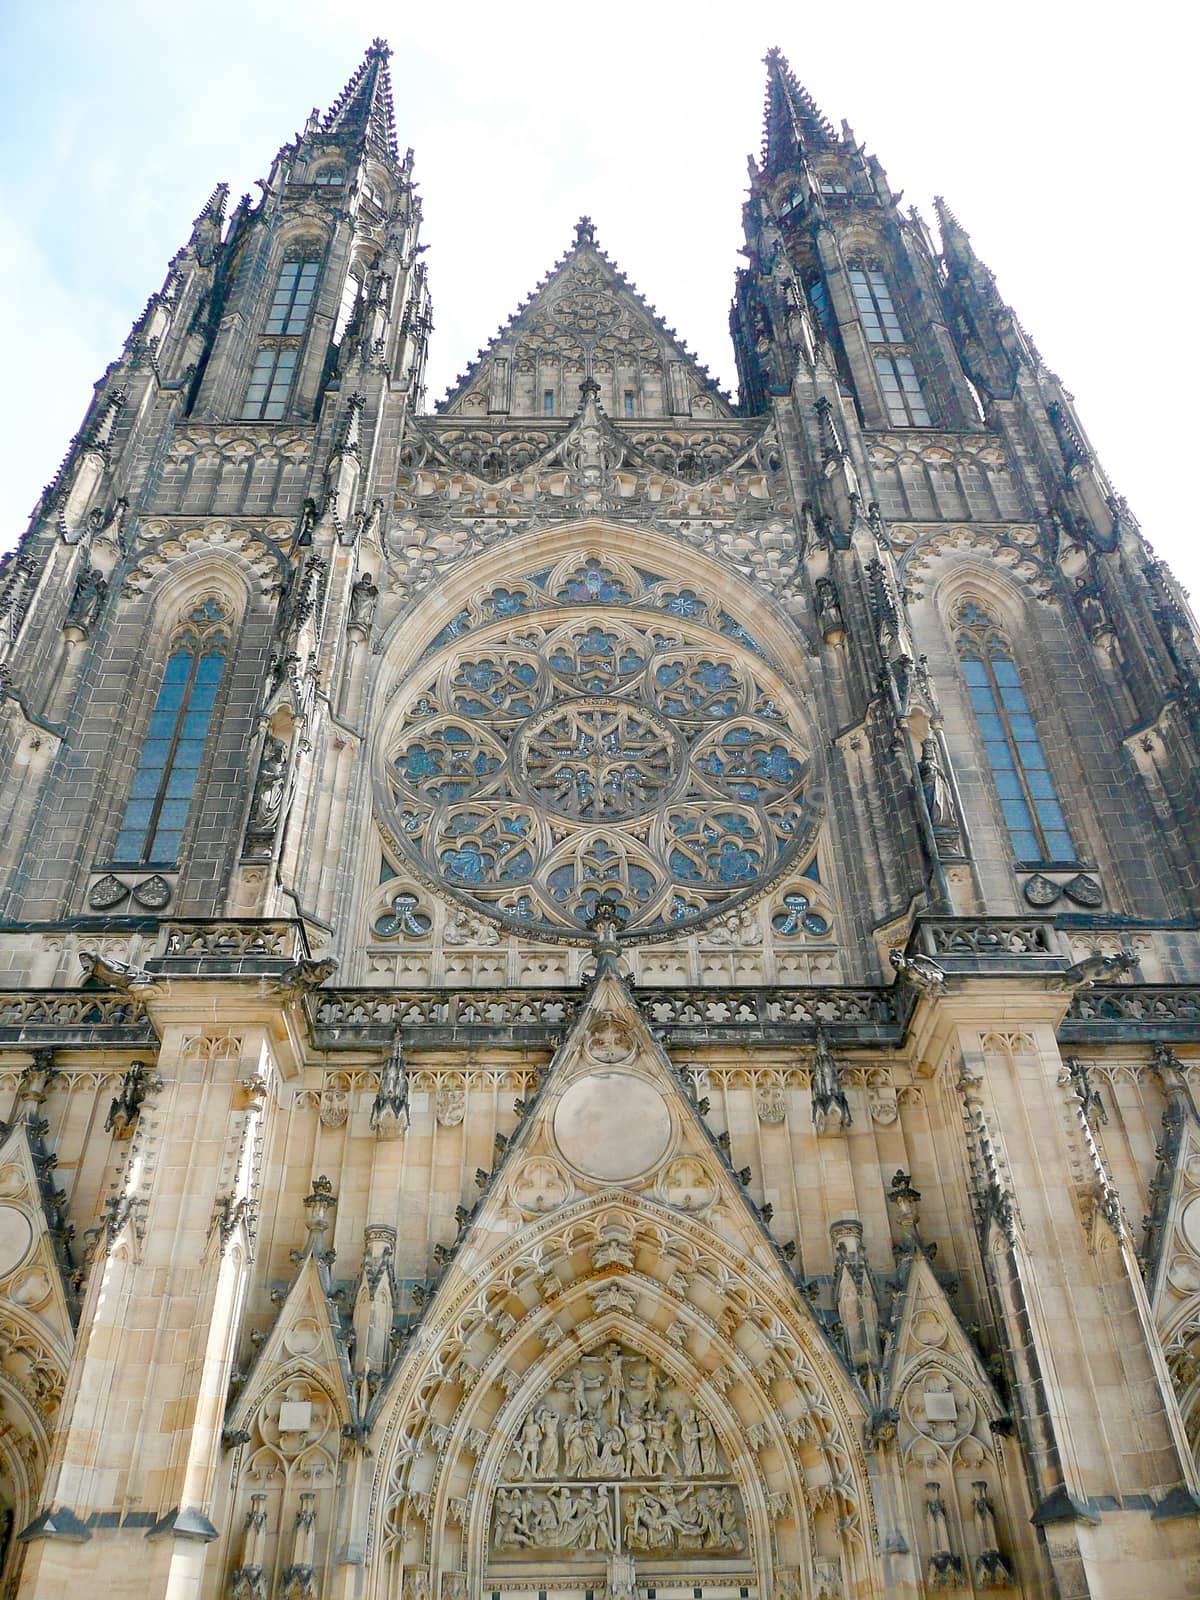 Facade of St Vitus Cathedral, Prague, Czech Republic